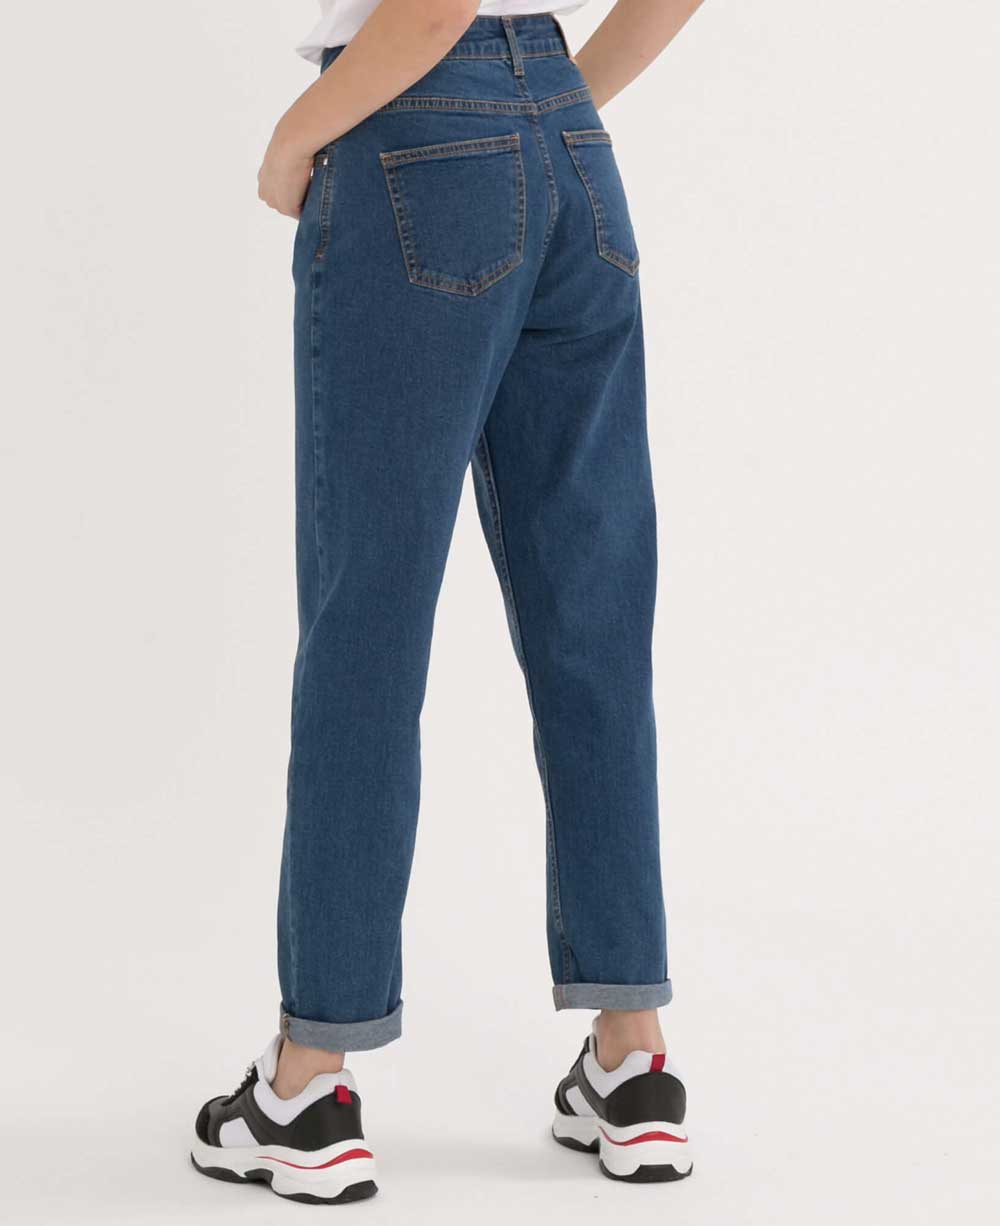 Jeans Terranova inverno 2020